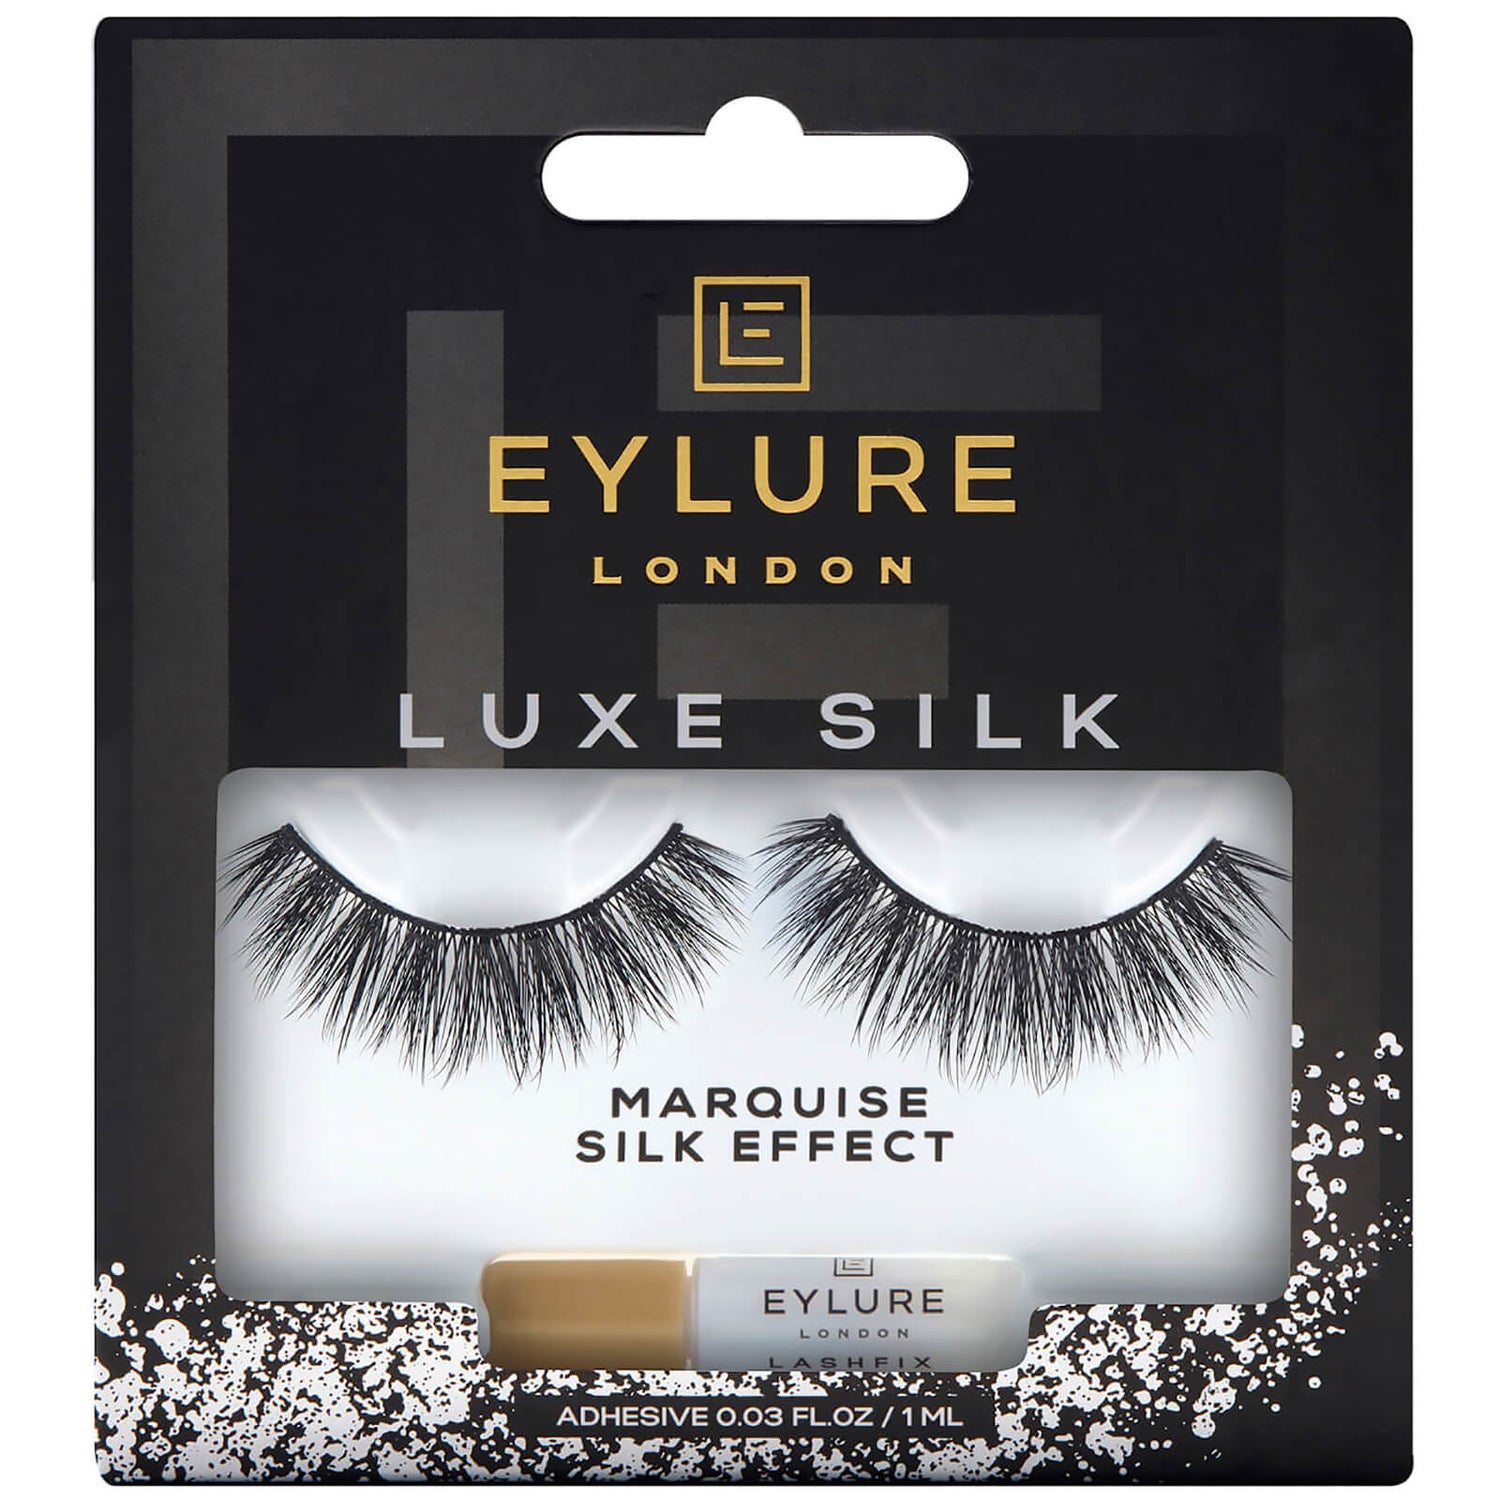 Eylure Luxe Silk Marquise Lash